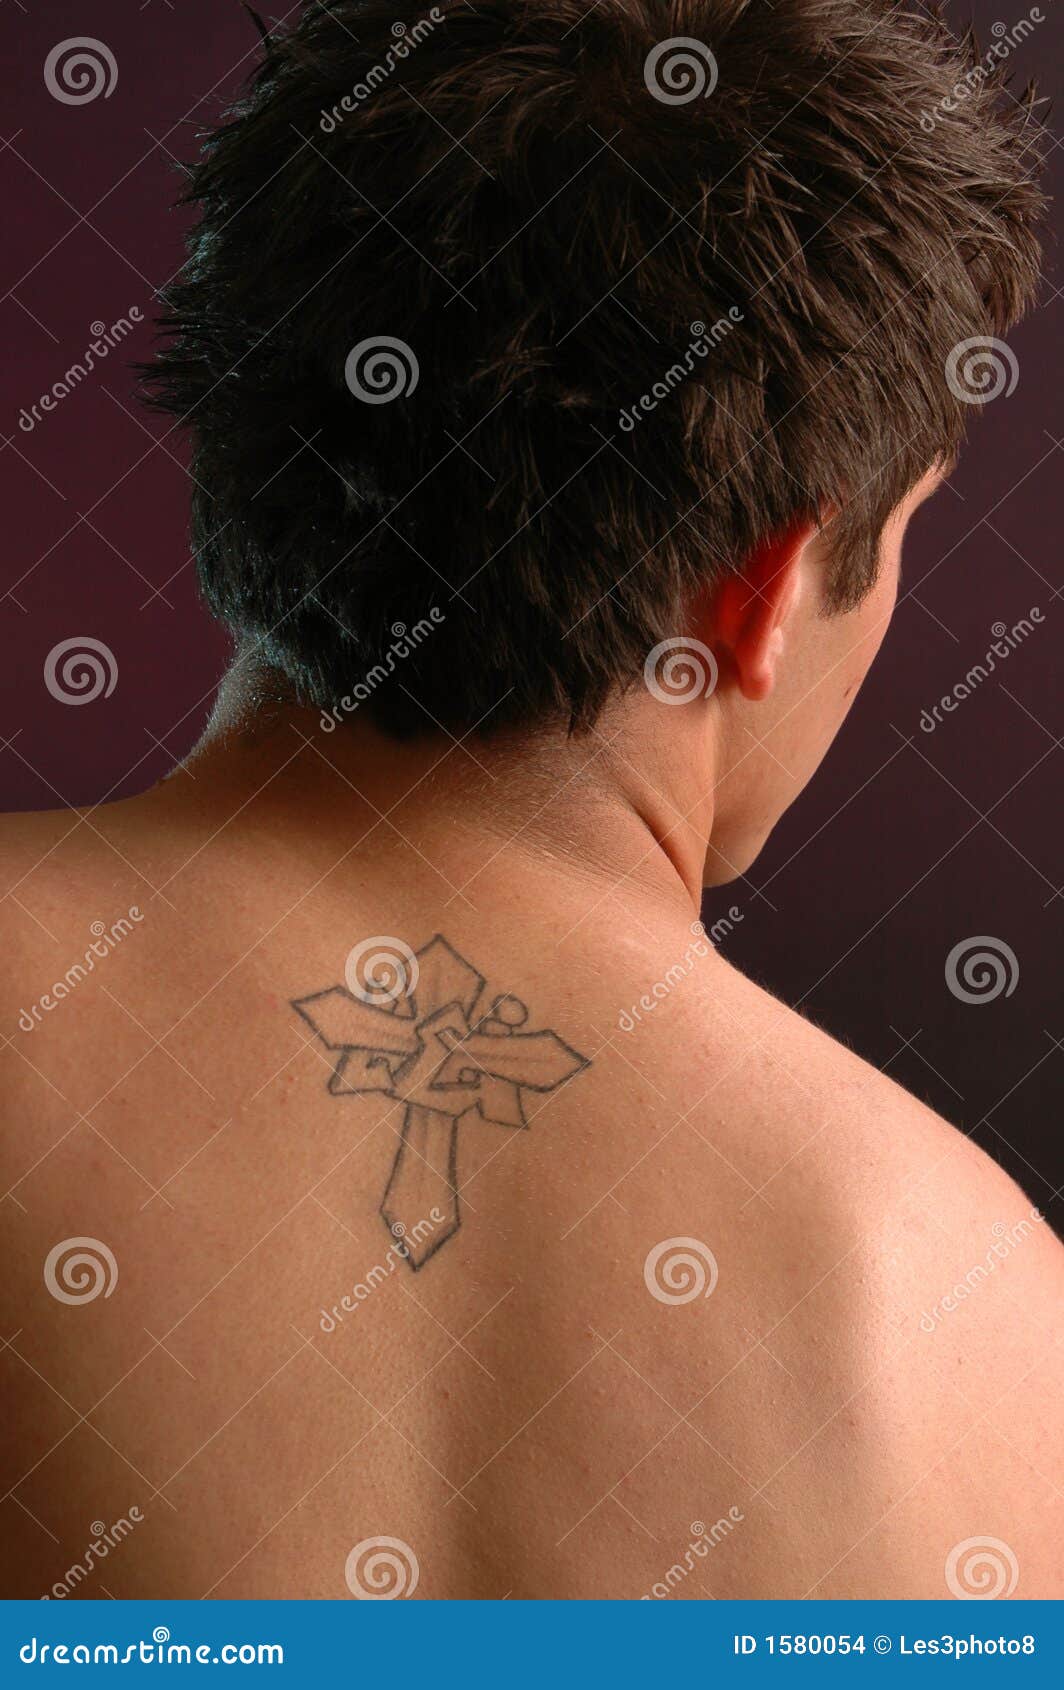 shoulder blade cross tattoos for men